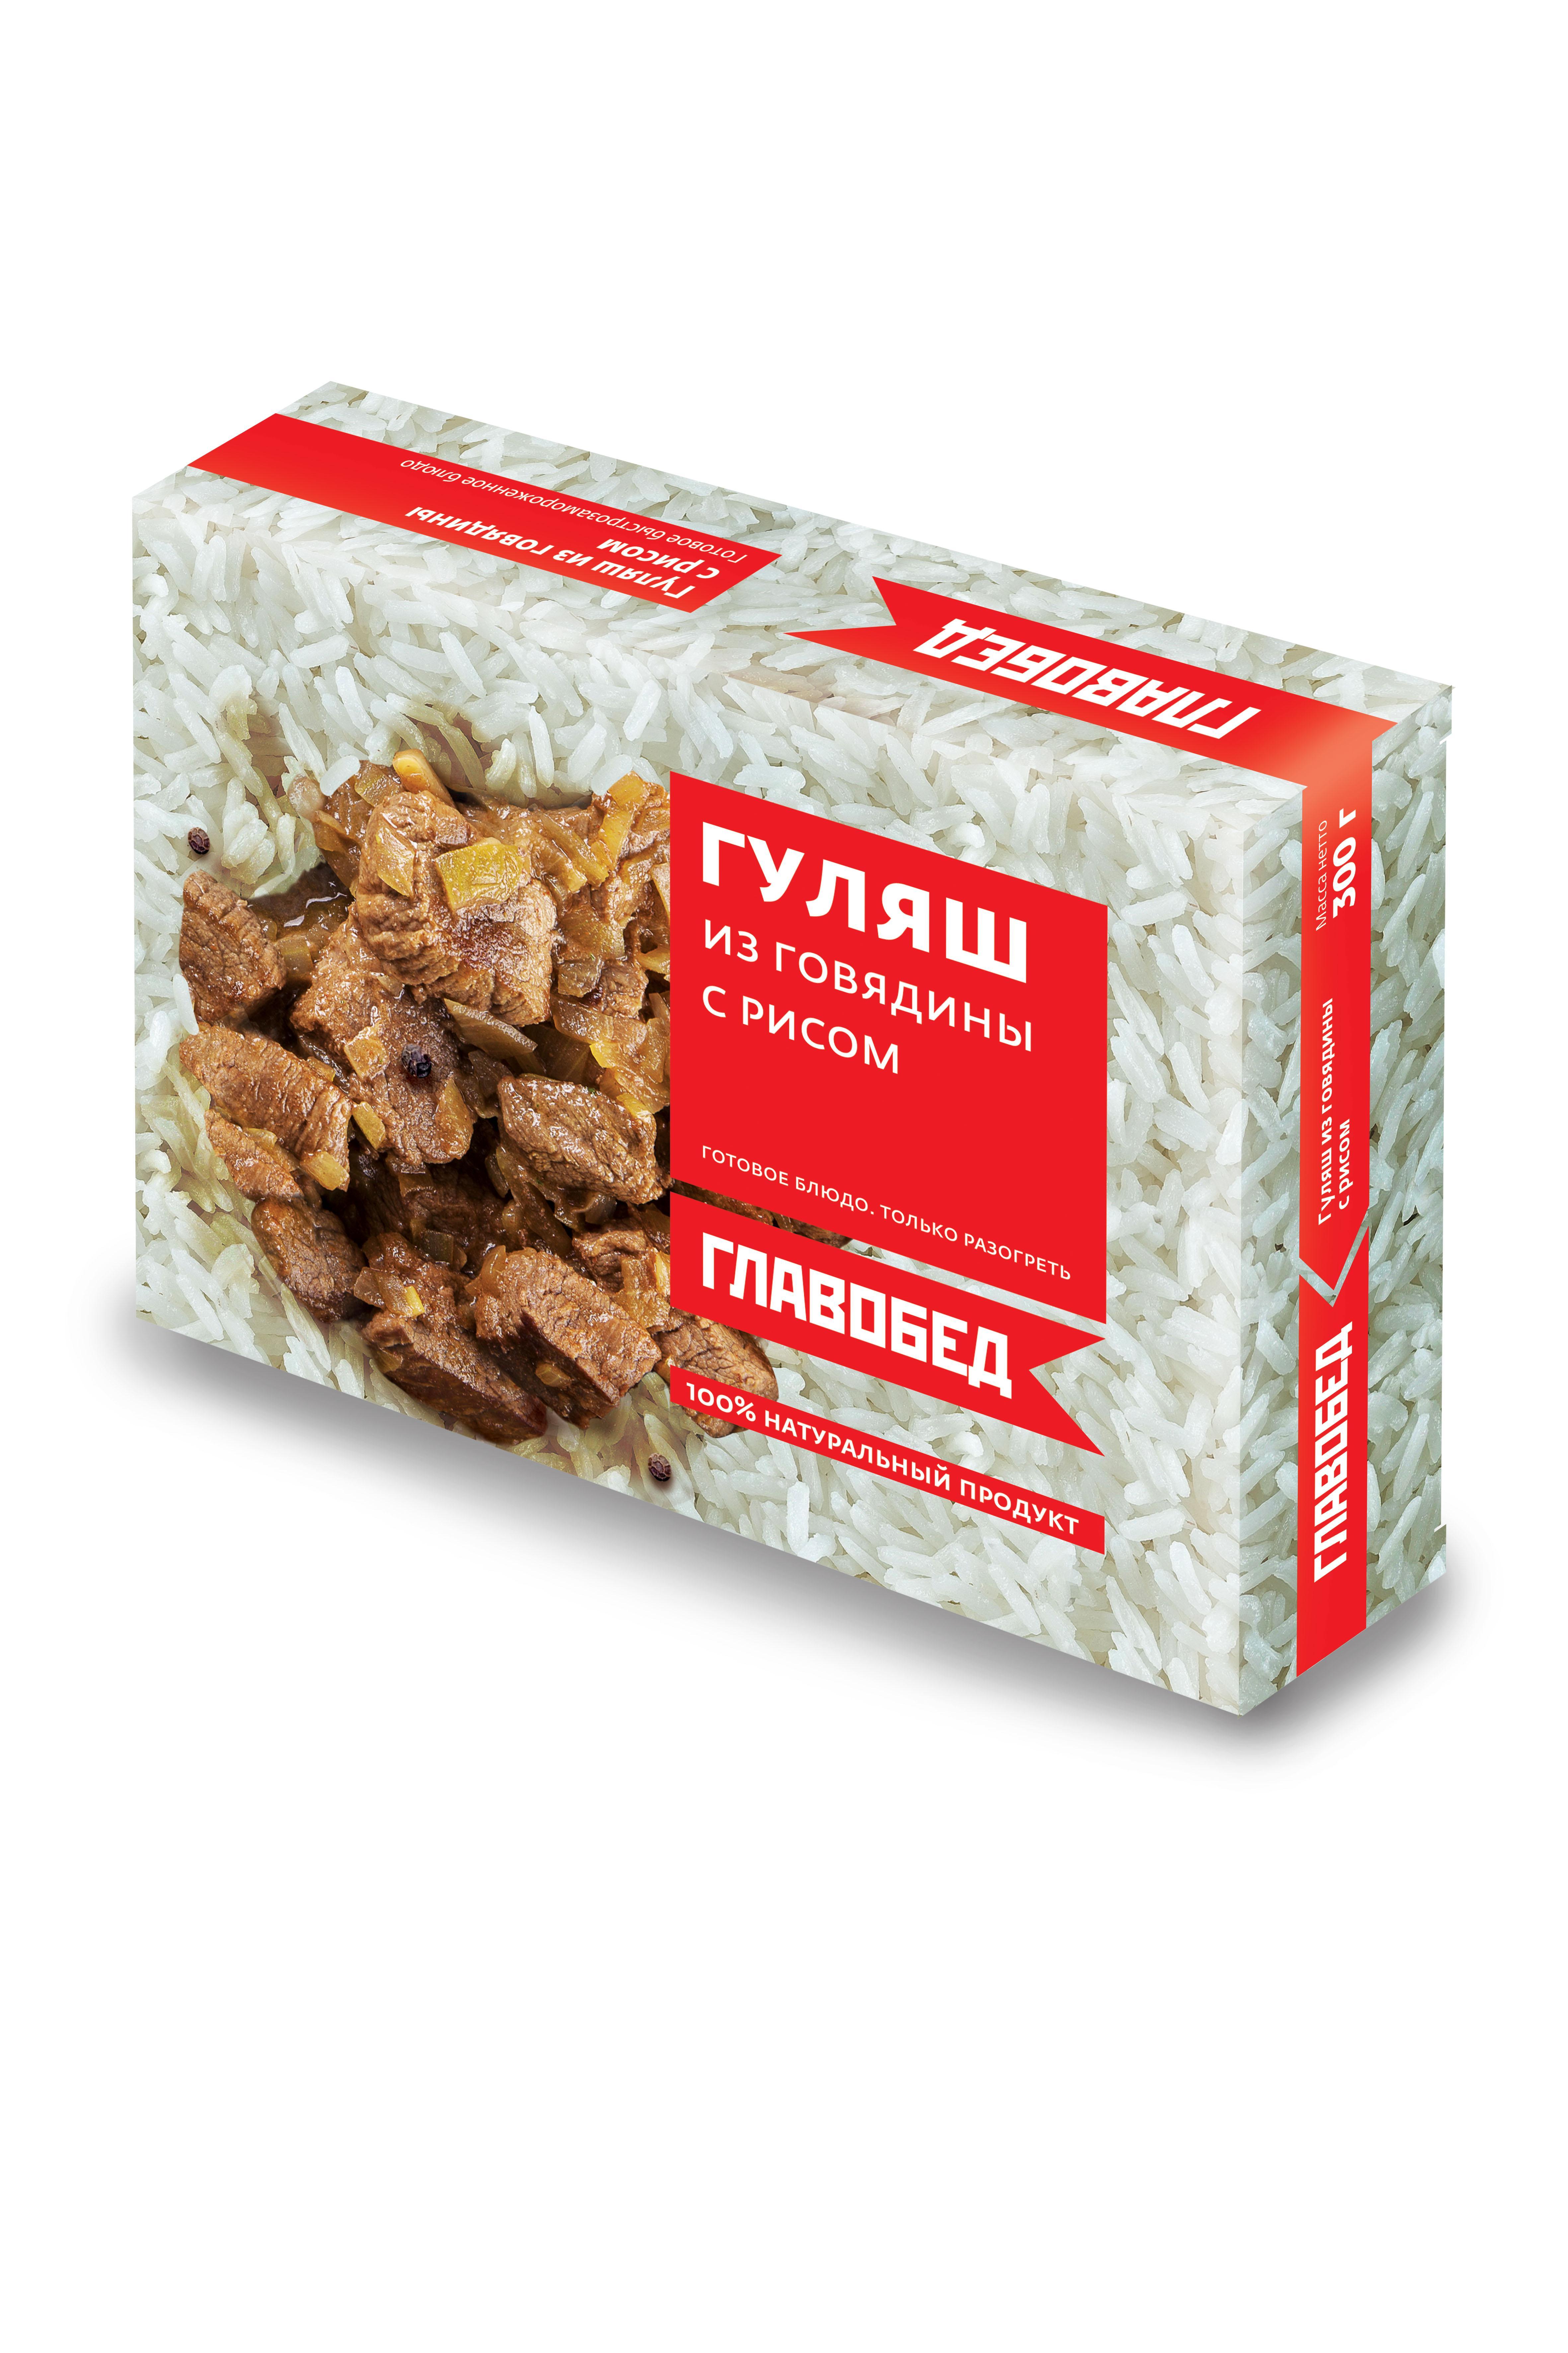 Гуляш Главобед из говядины с рисом, 300 гр., картон